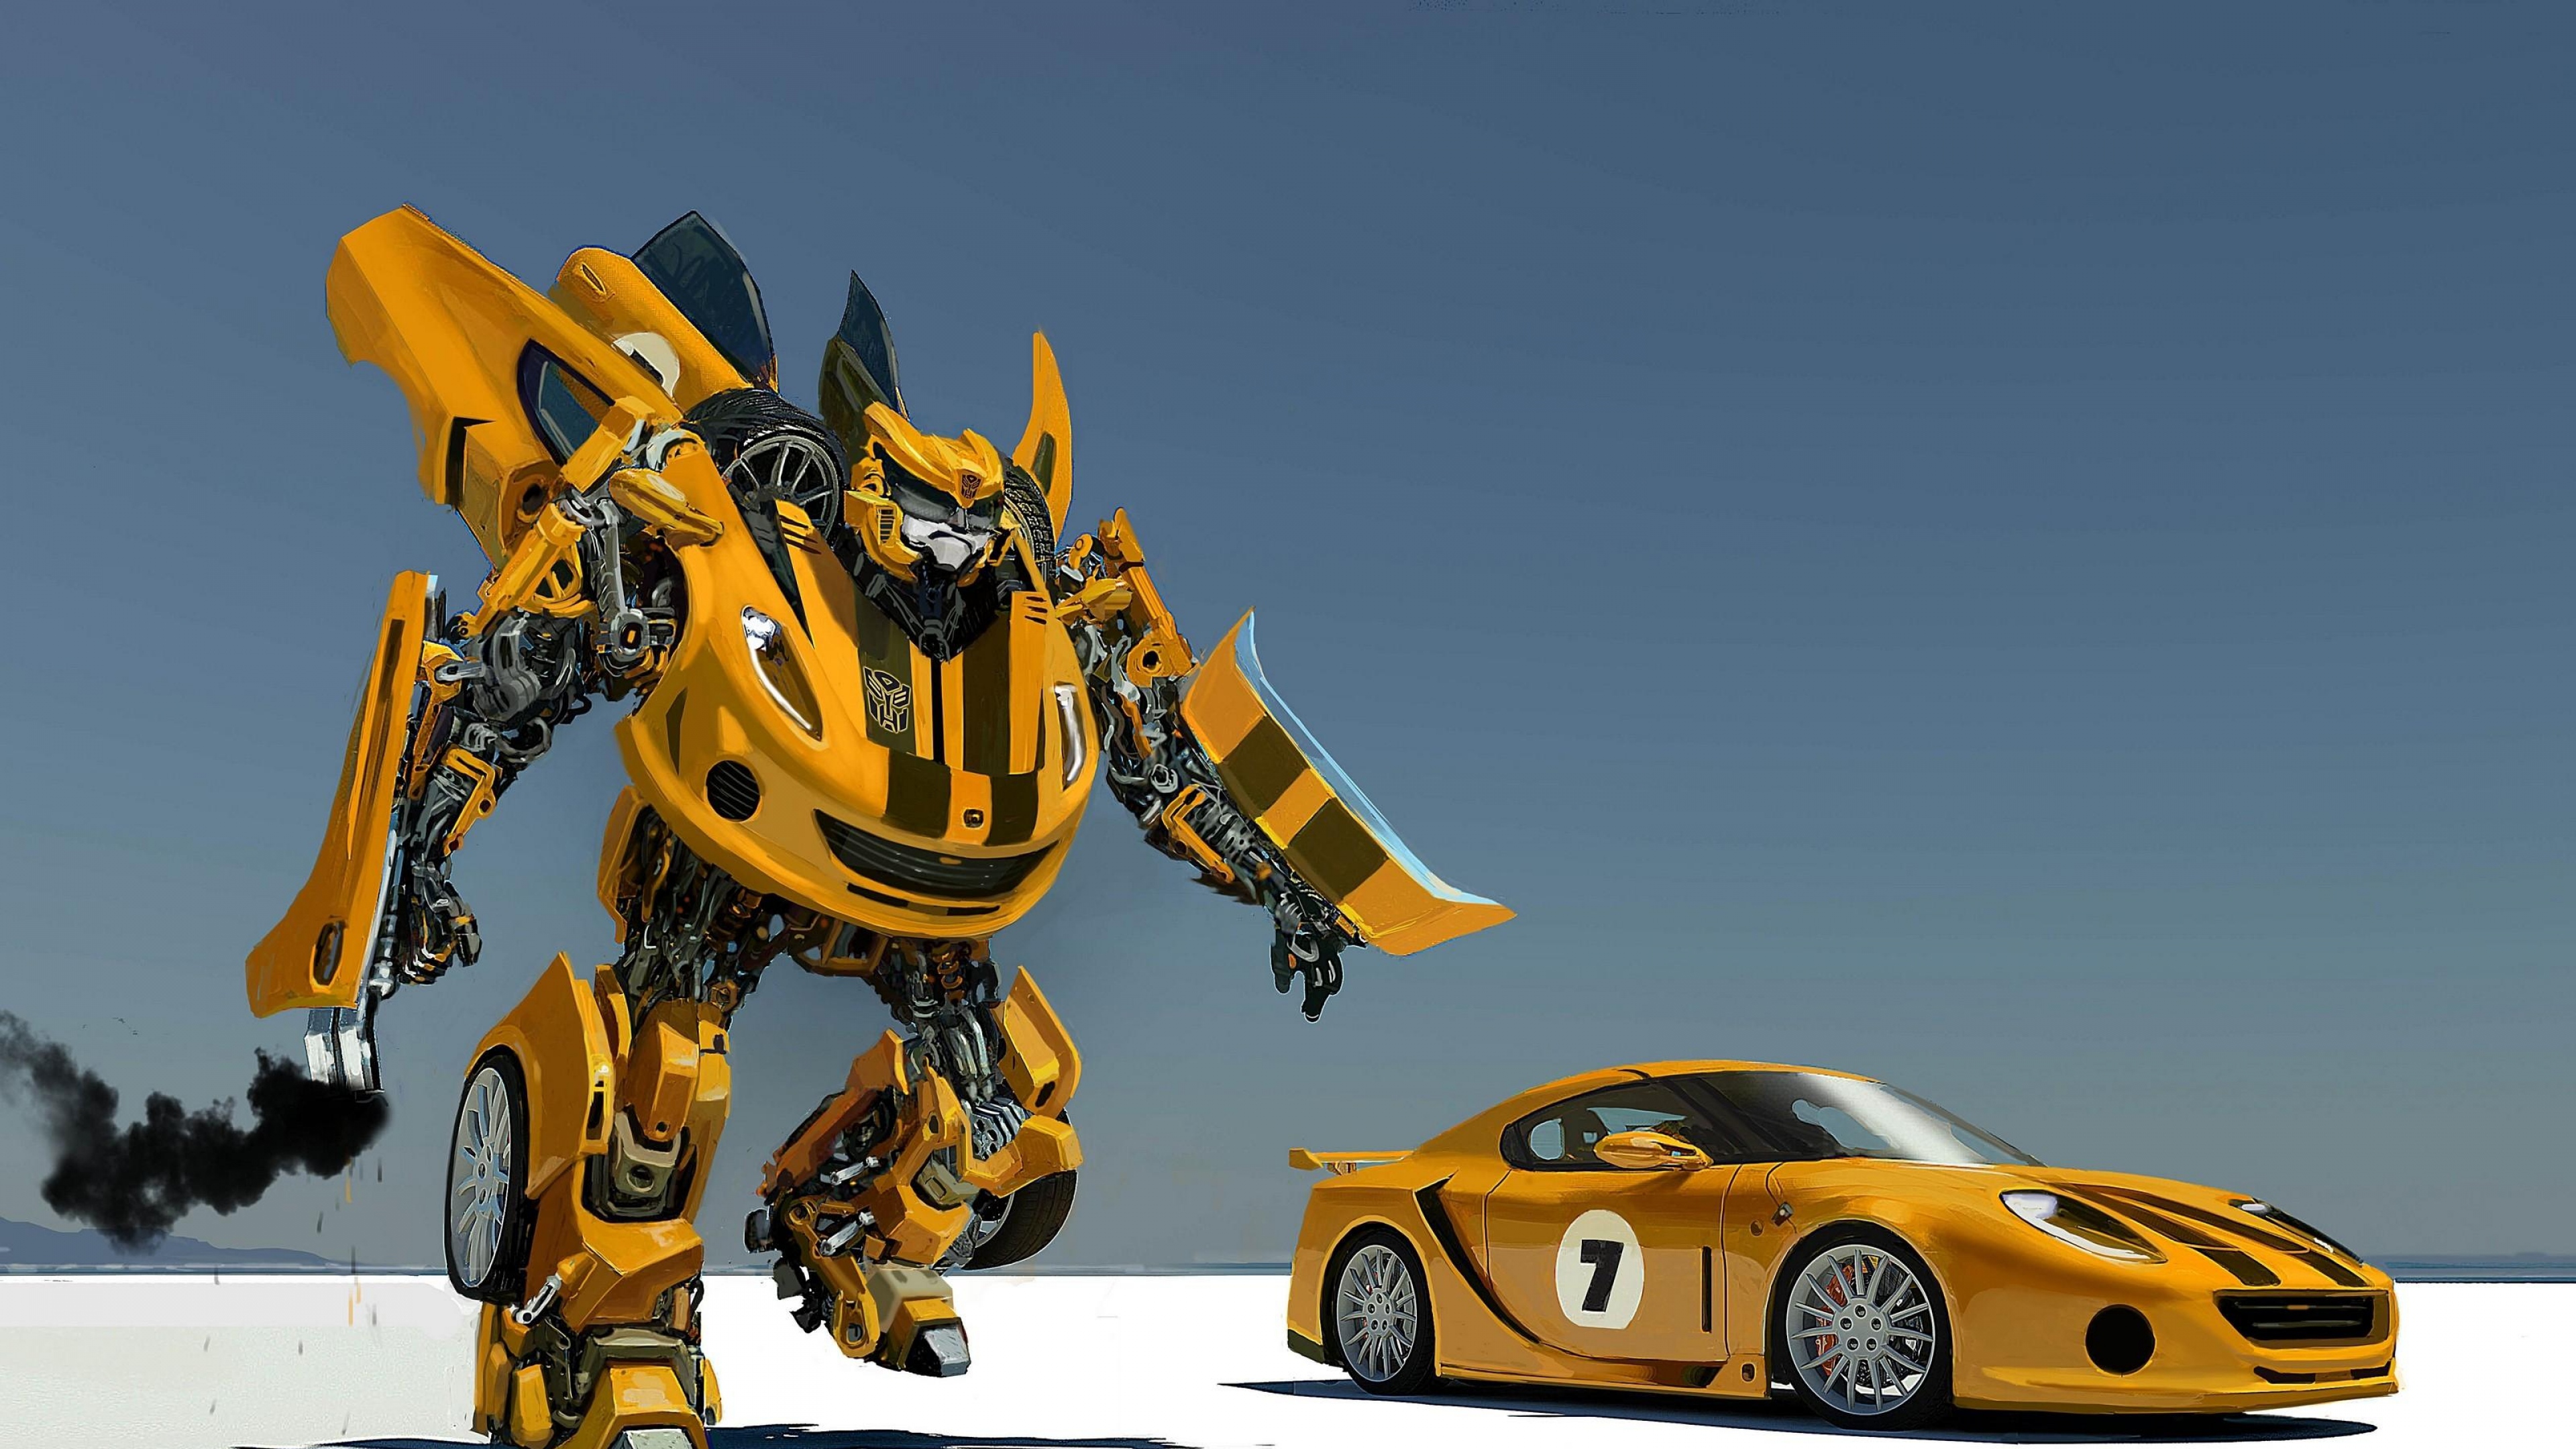 Transformers Backgrounds Pictures | PixelsTalk.Net